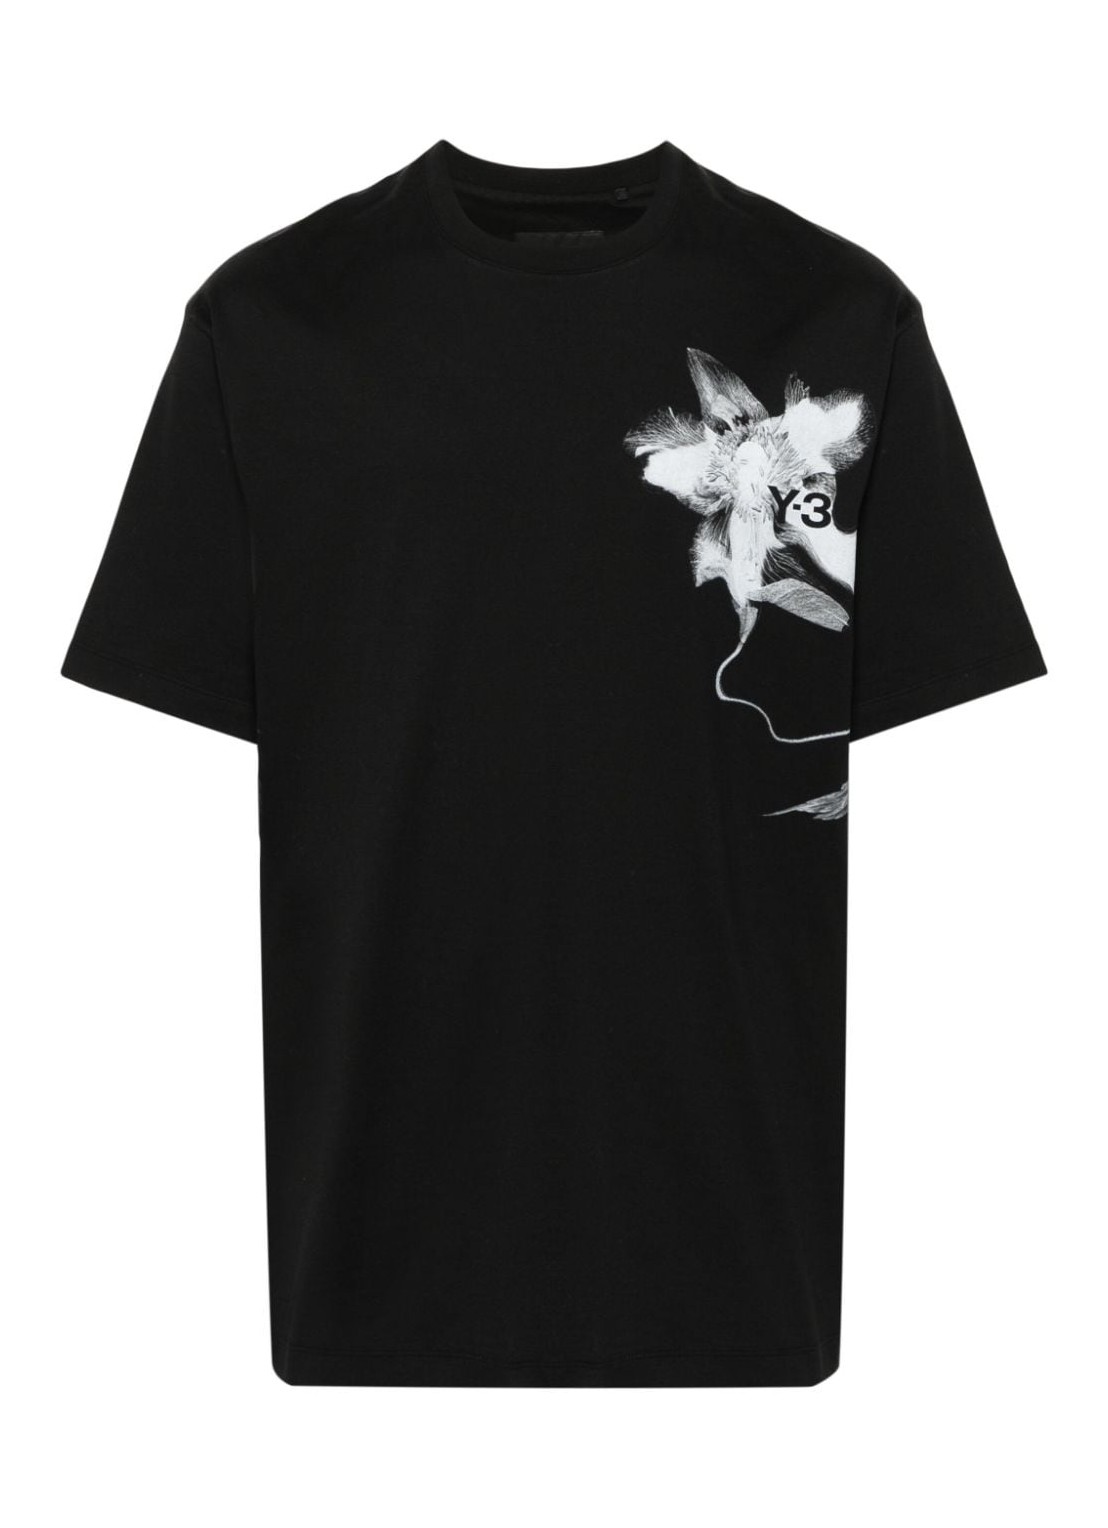 Camiseta y3 t-shirt man gfx ss tee 1 in4353 black talla M
 